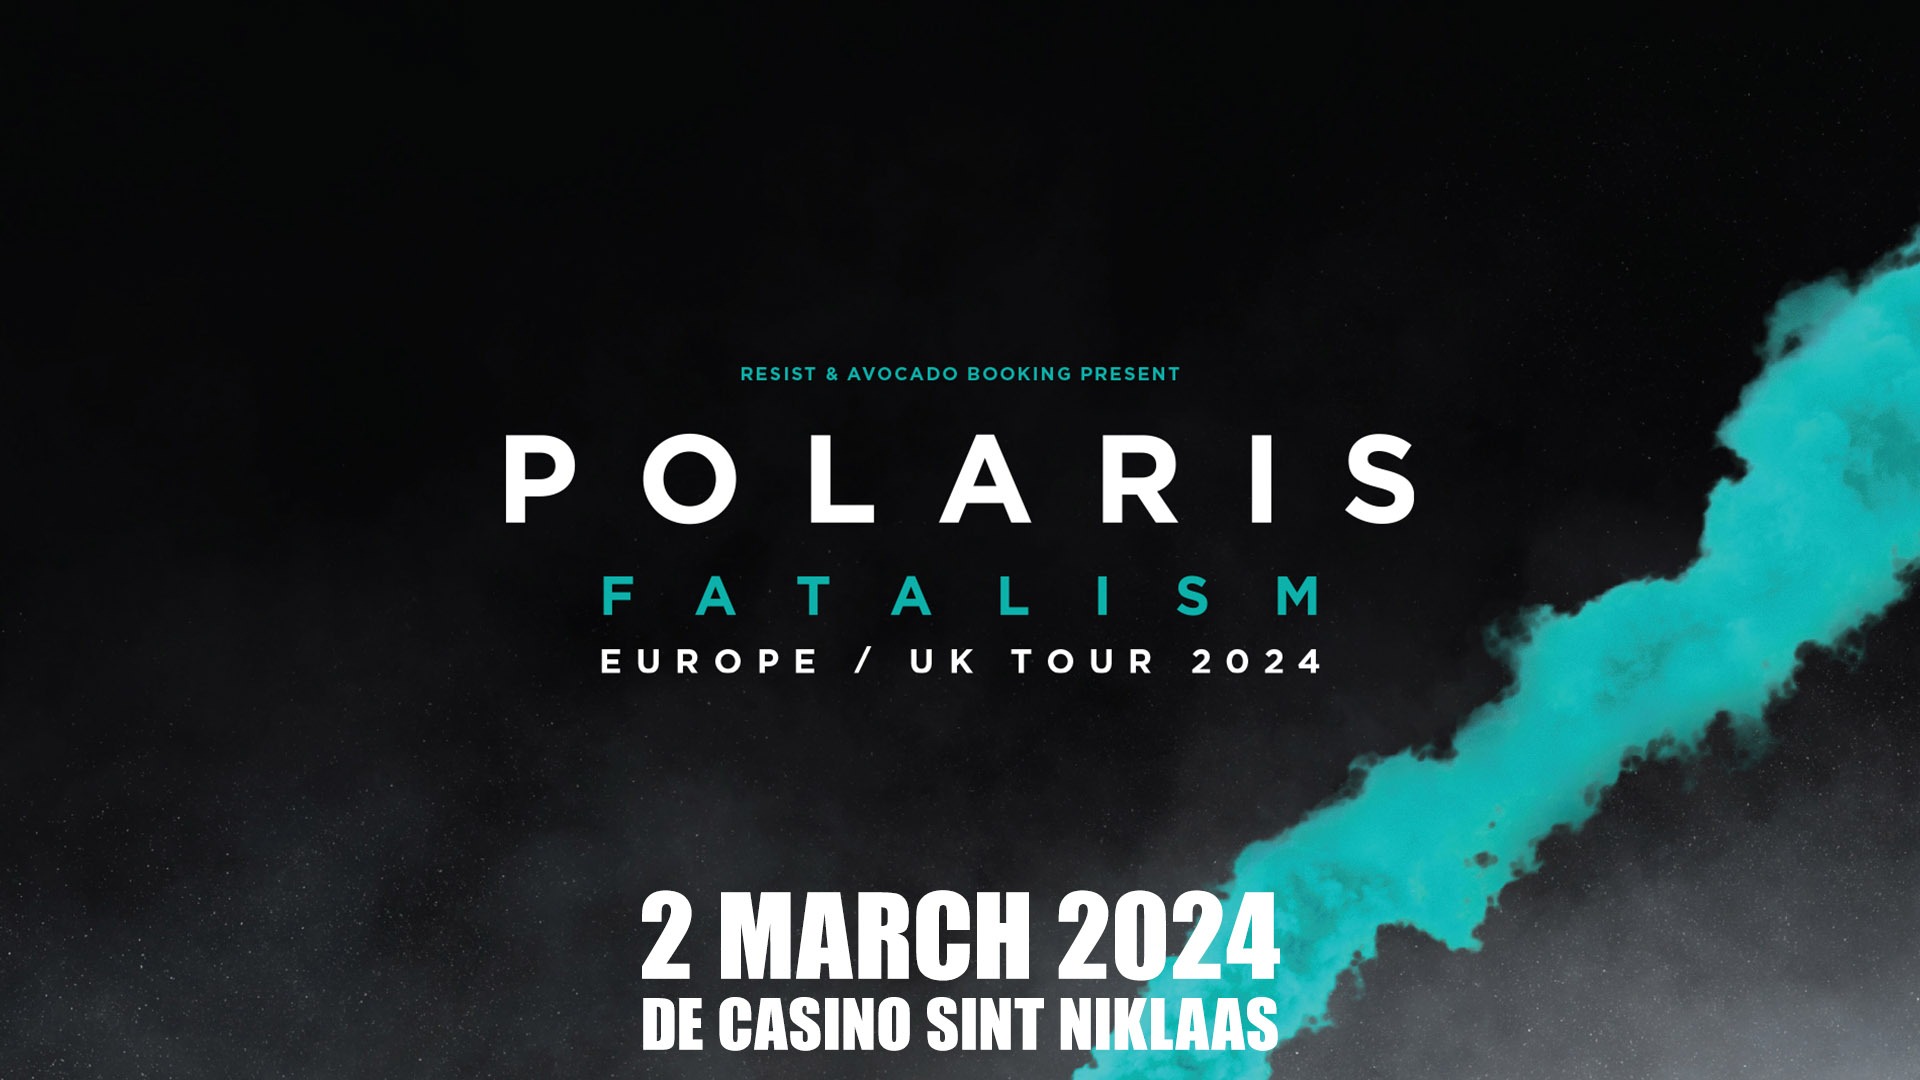 Polaris + Silent Planet + Thornhill + Paledusk @De Casino Sint Niklaas, 2 maart 2024